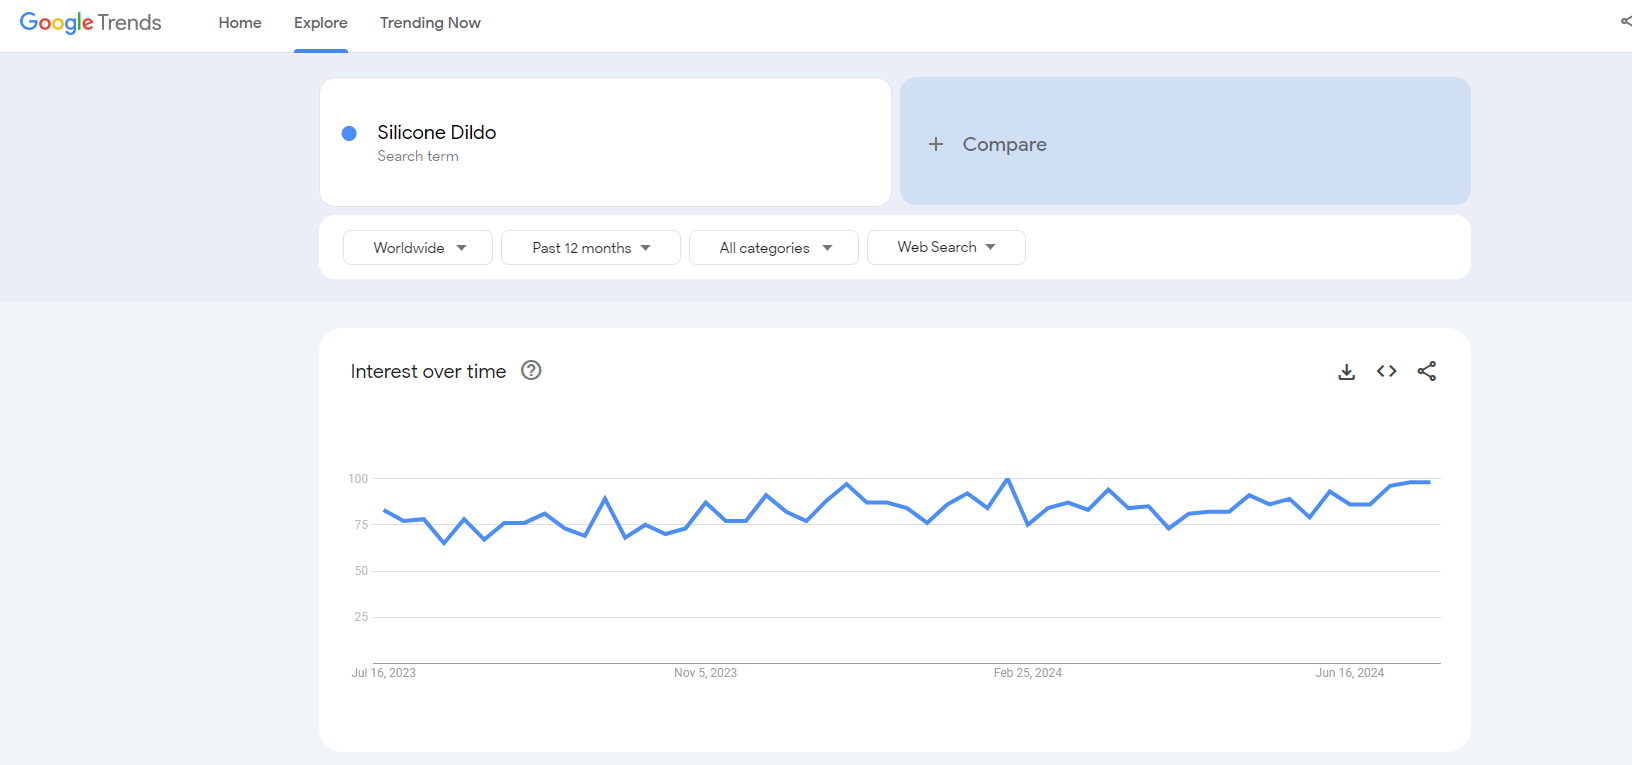 silicone dildo google trends results